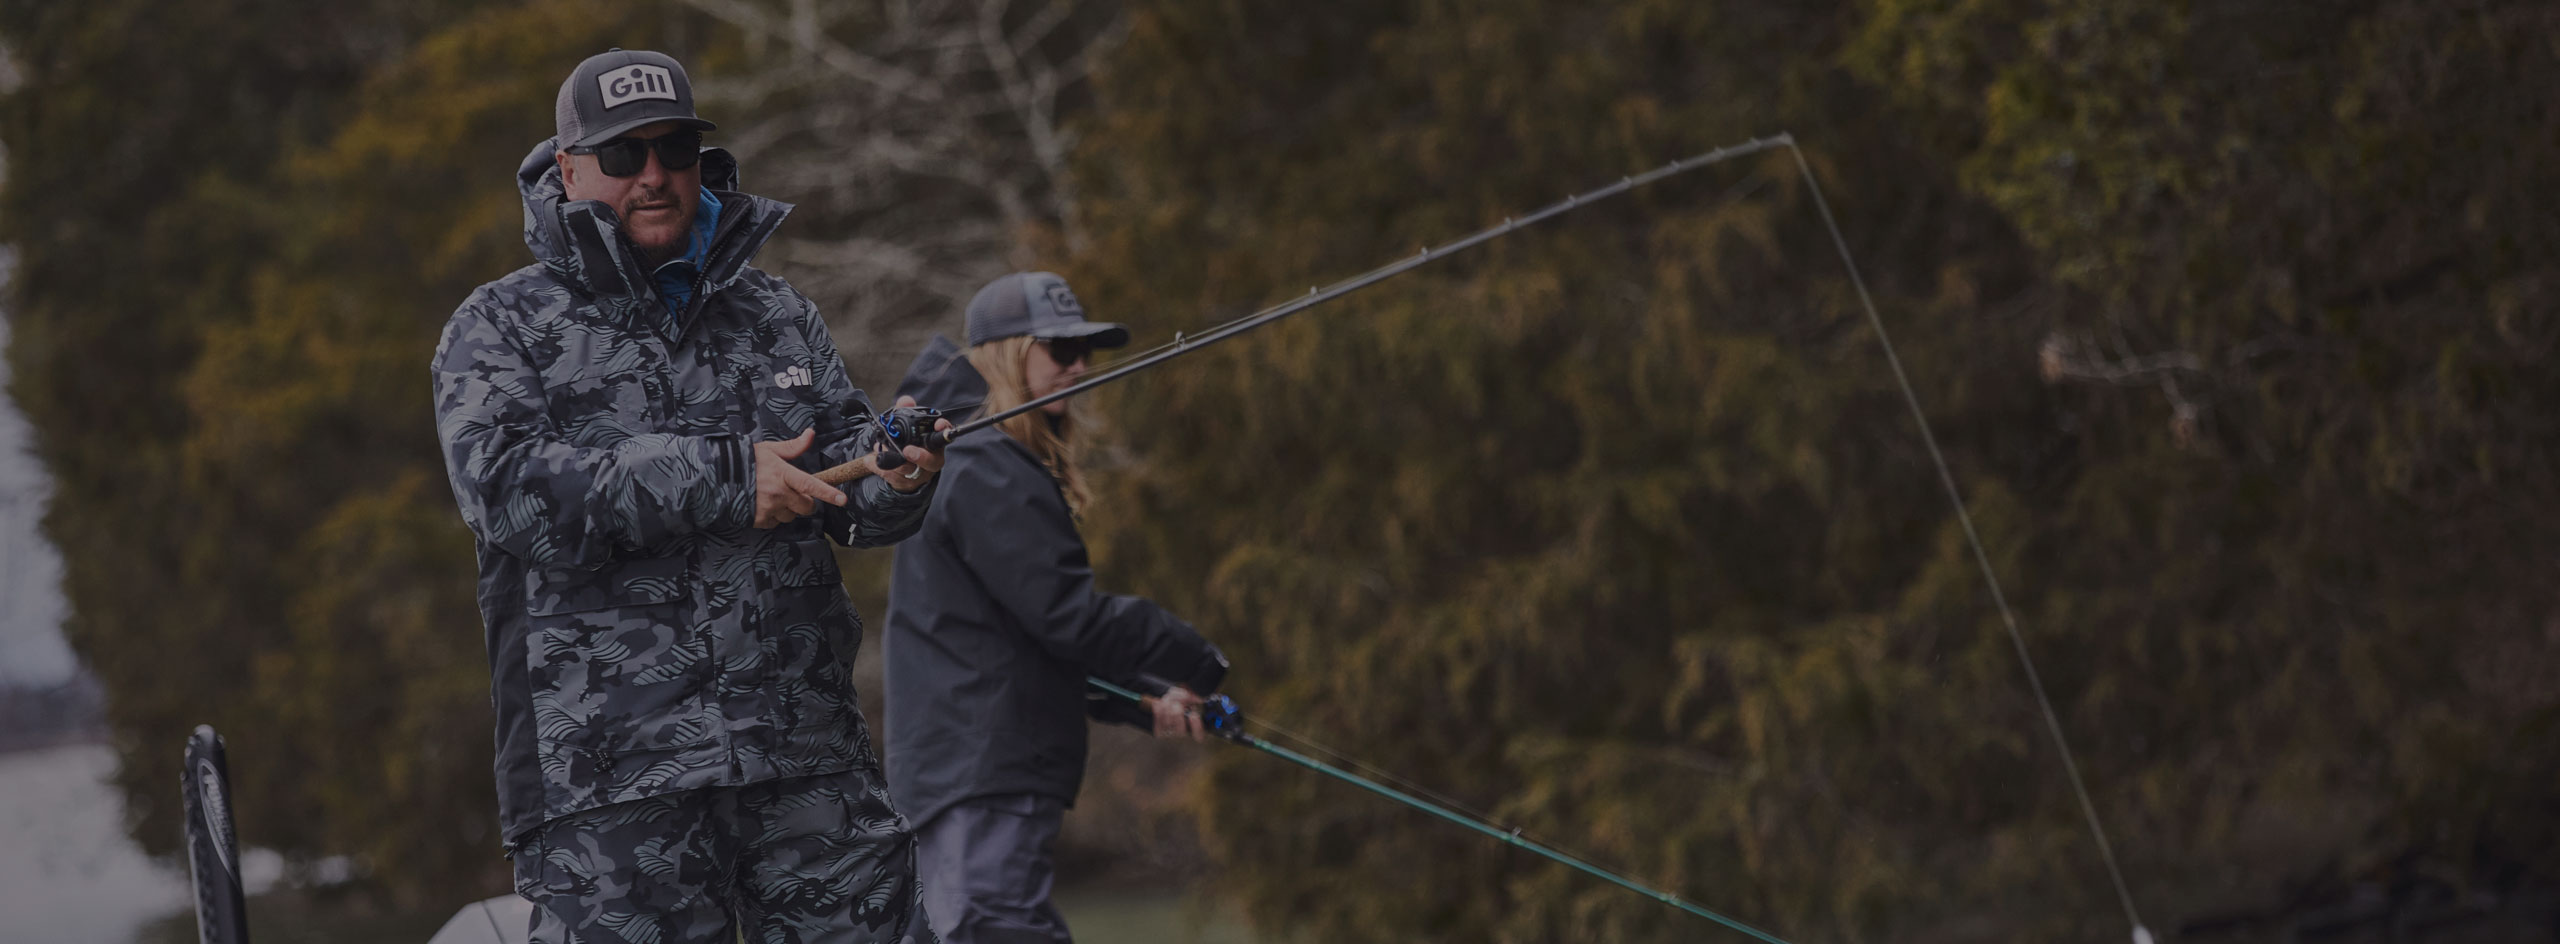 Striker Rain Gear  Men's Rain Jackets and Insulated Bibs For Fishing